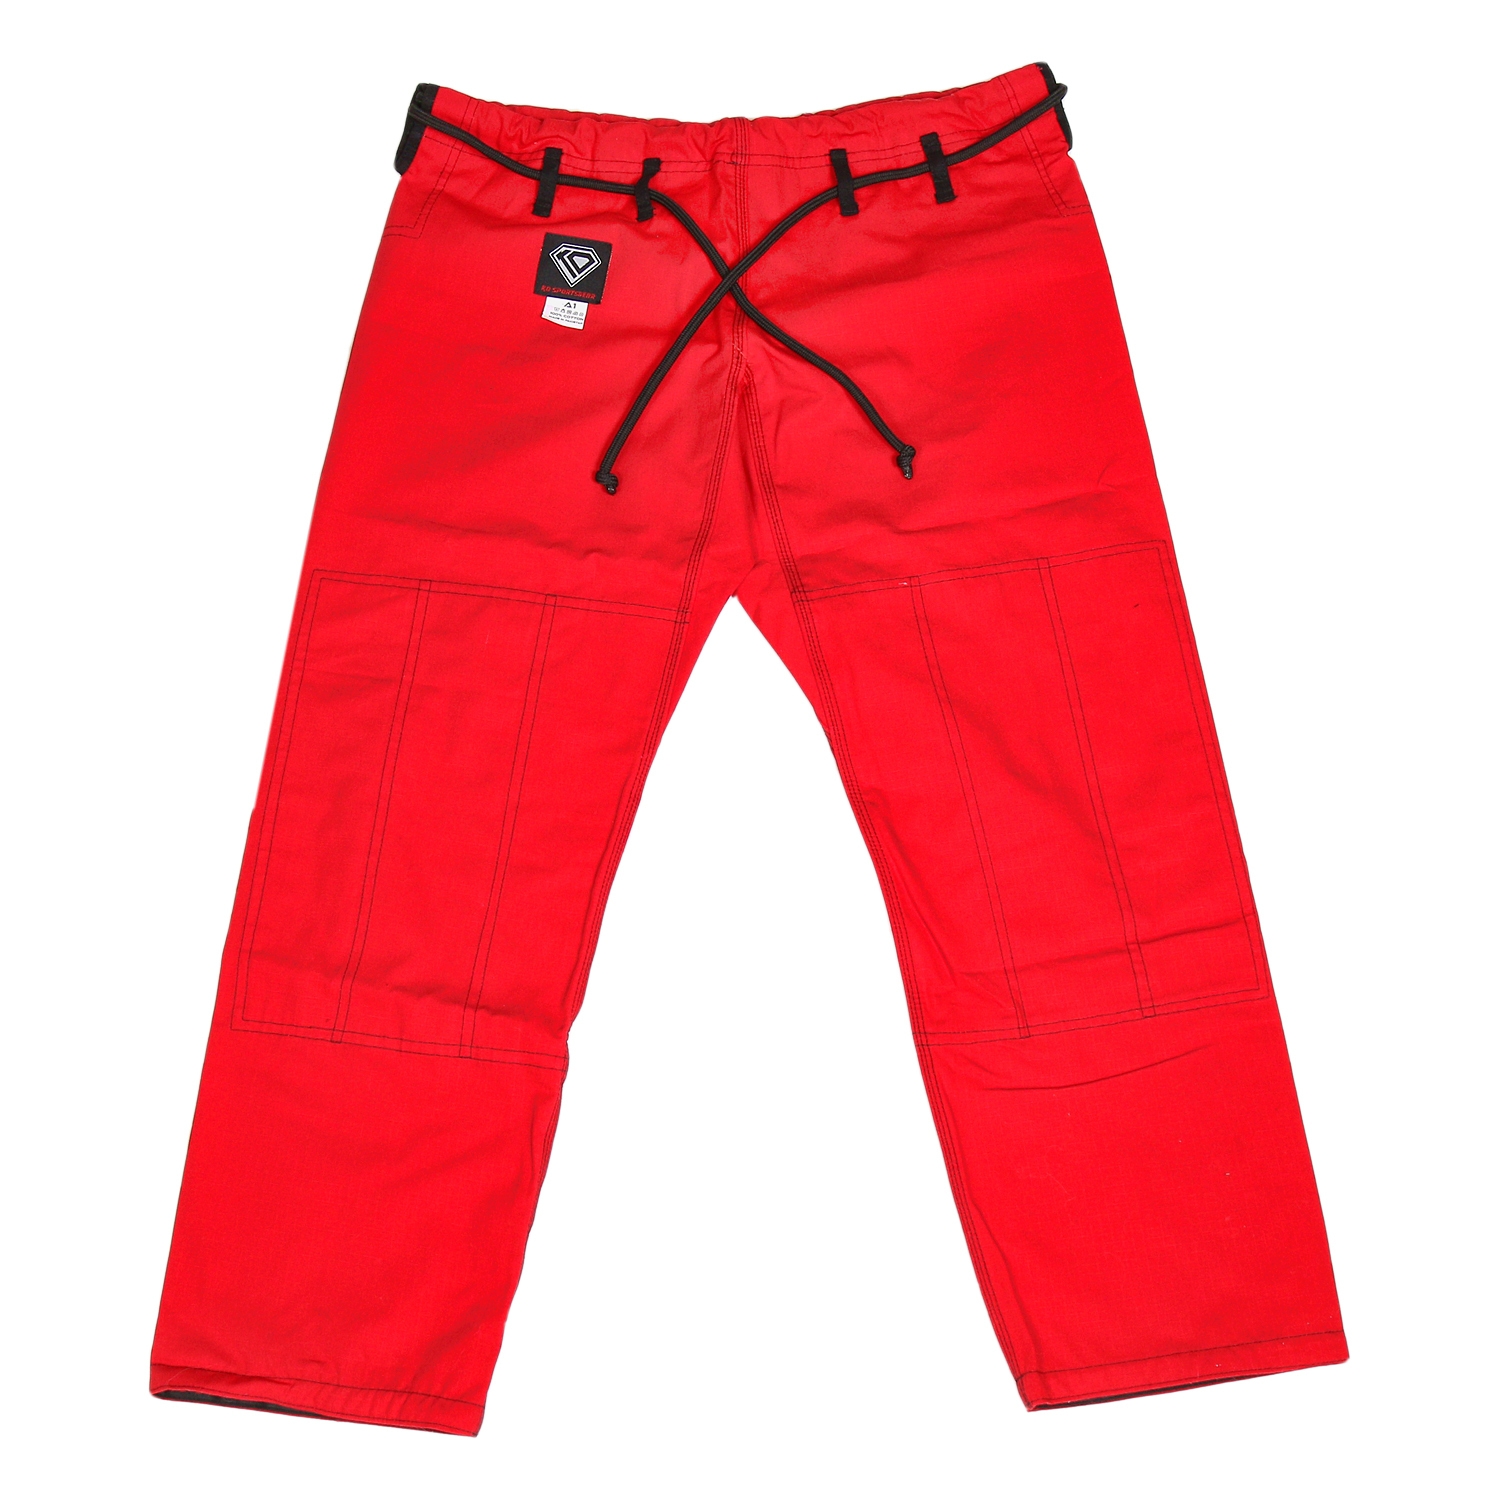 KO Sports Gear's Red Gi - BJJ Kimono and Pants - Pearl Weave - For Jiu ...